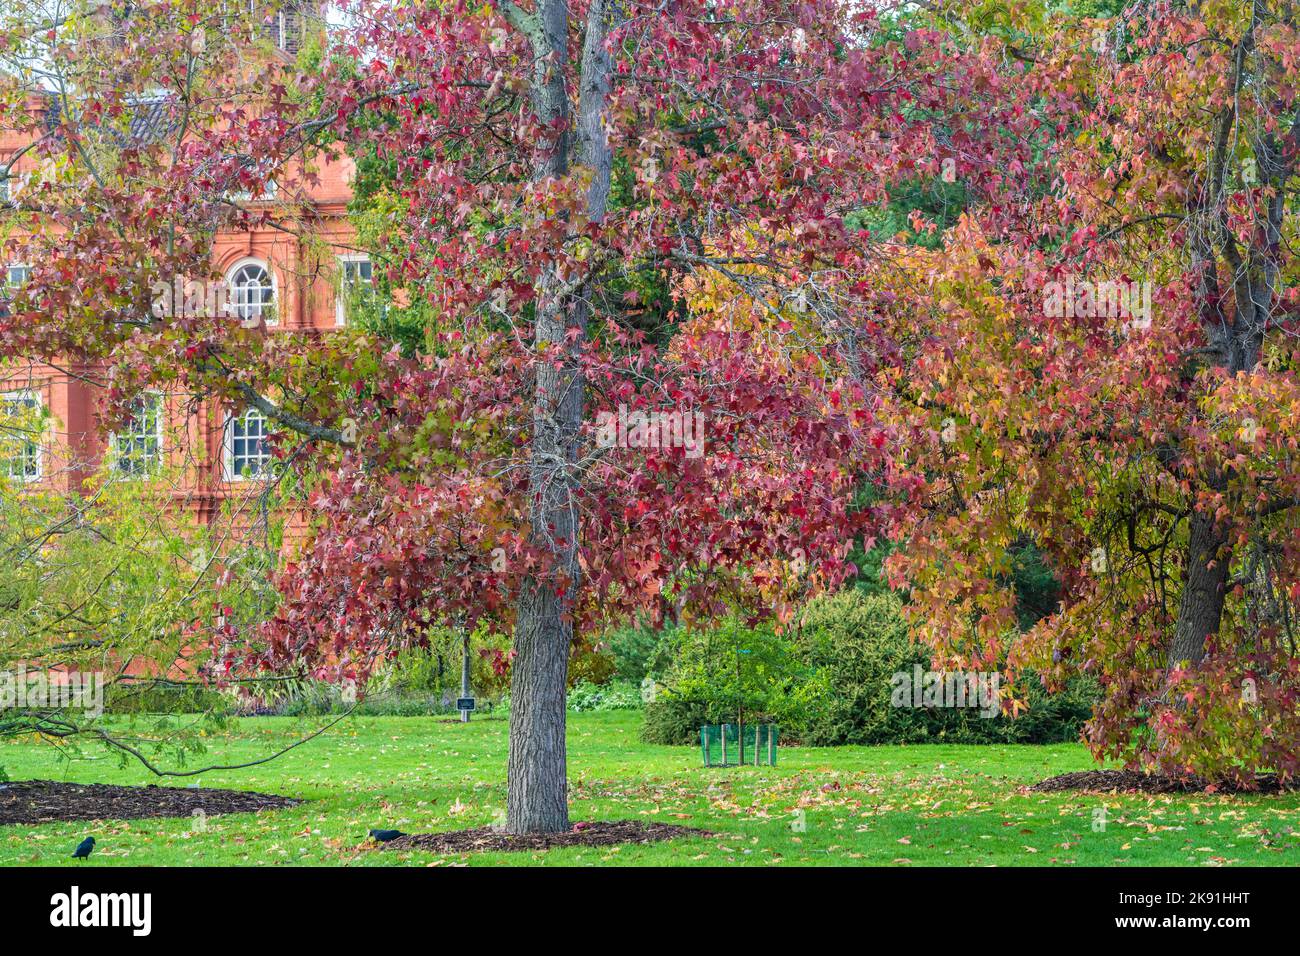 London, UK. Tuesday, 25 October, 2022. Autumn scenes at Kew Gardens Photo: Richard Gray/Alamy Live News Stock Photo